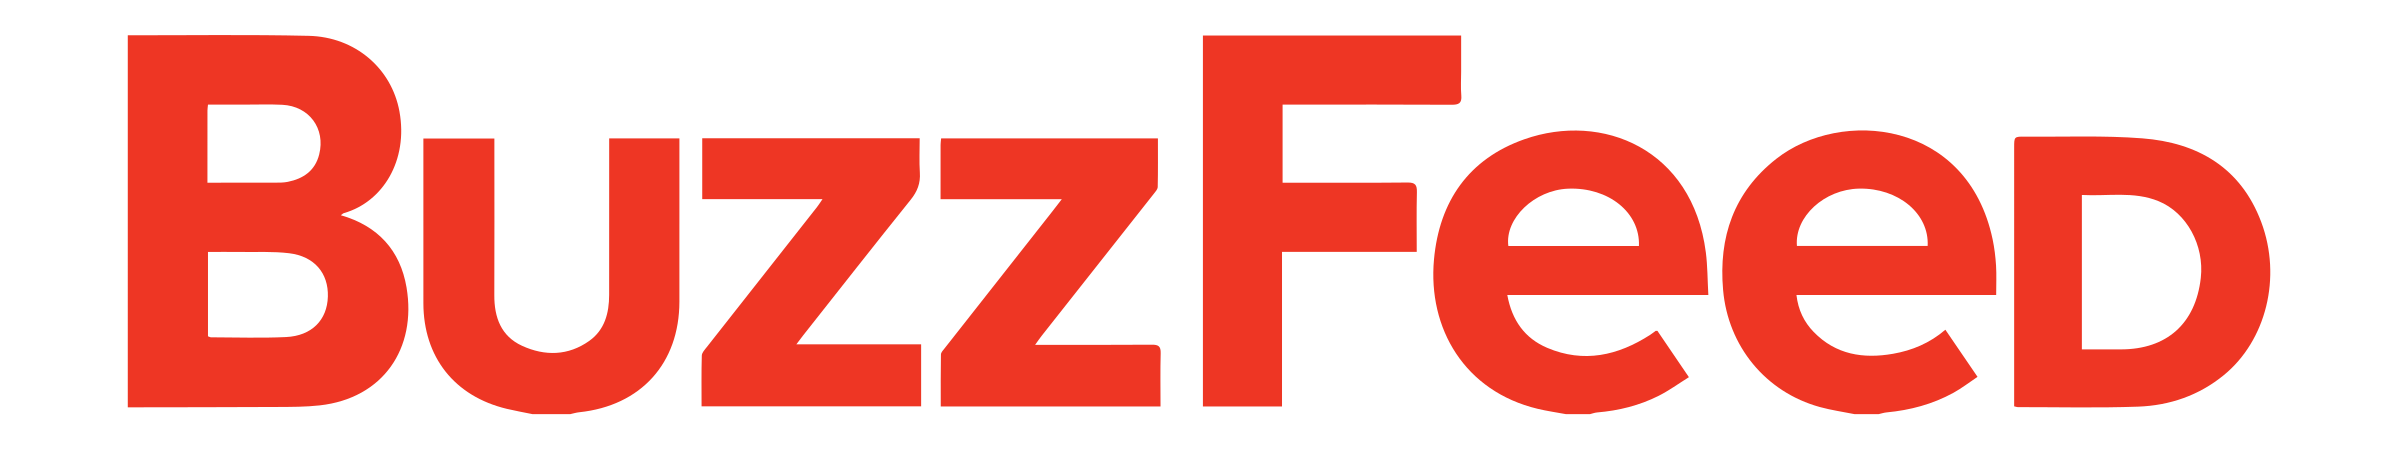 buzzfeed-logo-transparent.png